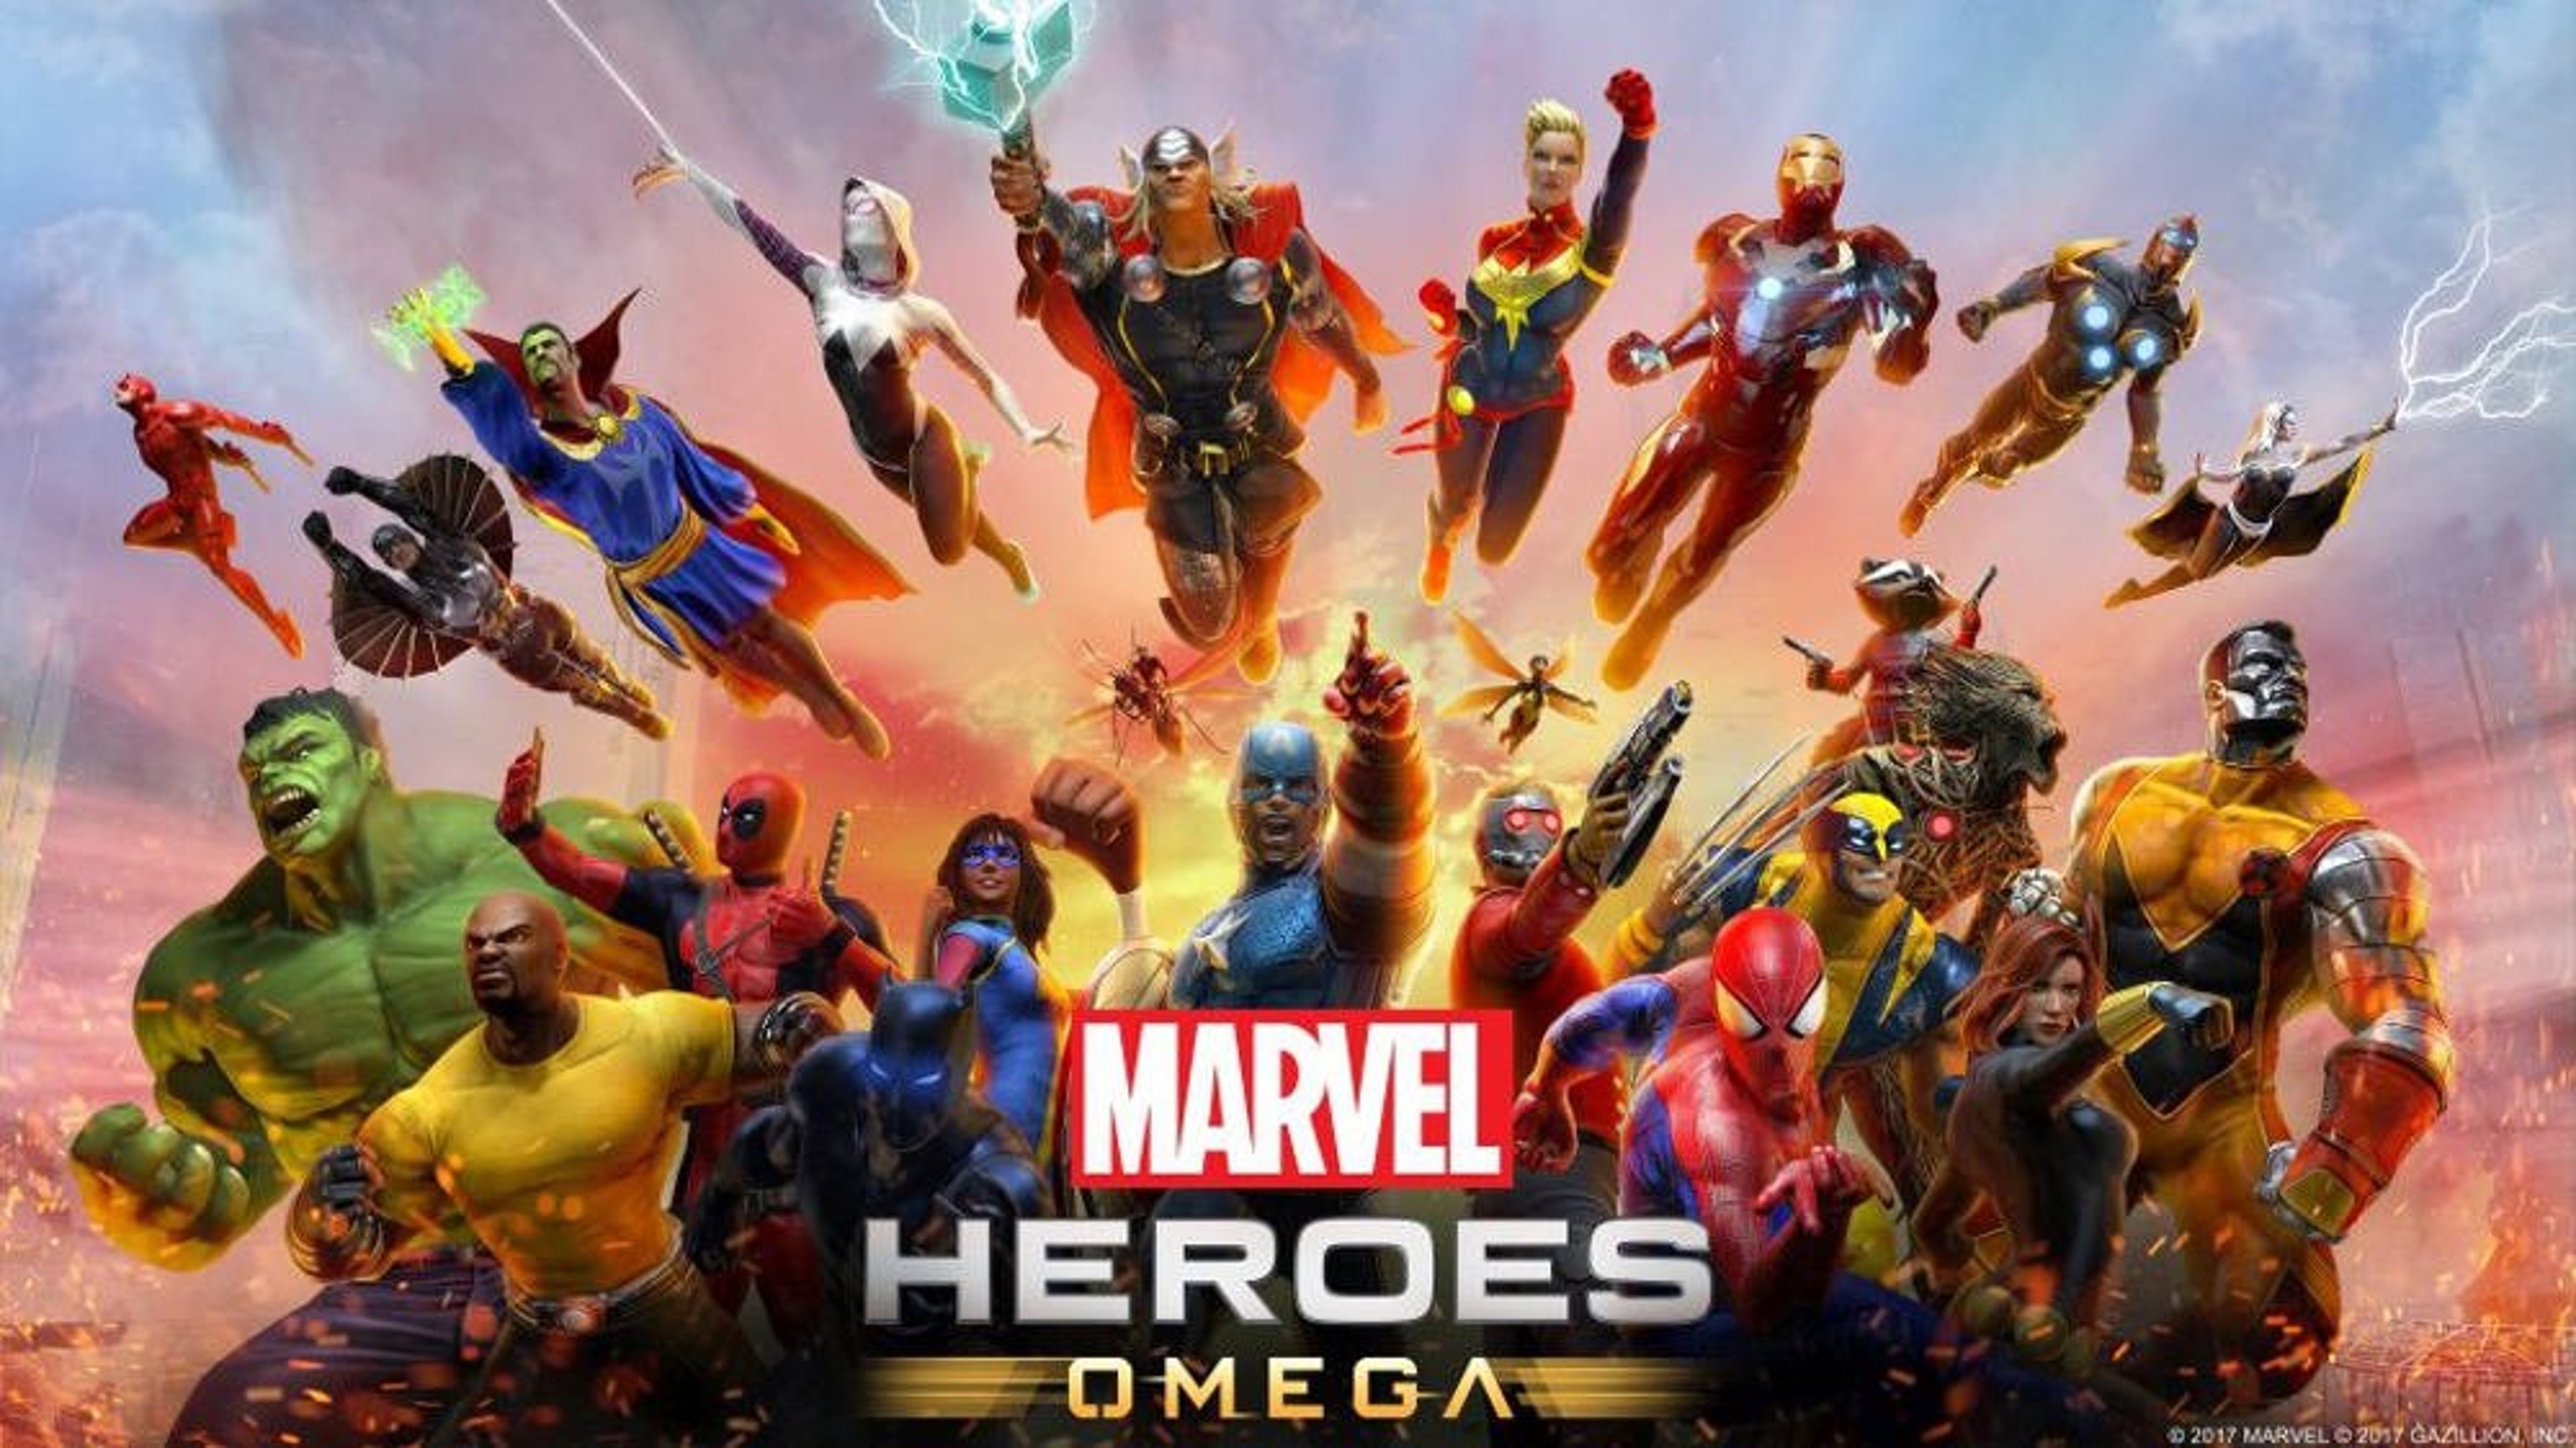 Annunciato Marvel Heroes Omega per PS4 e Xbox One